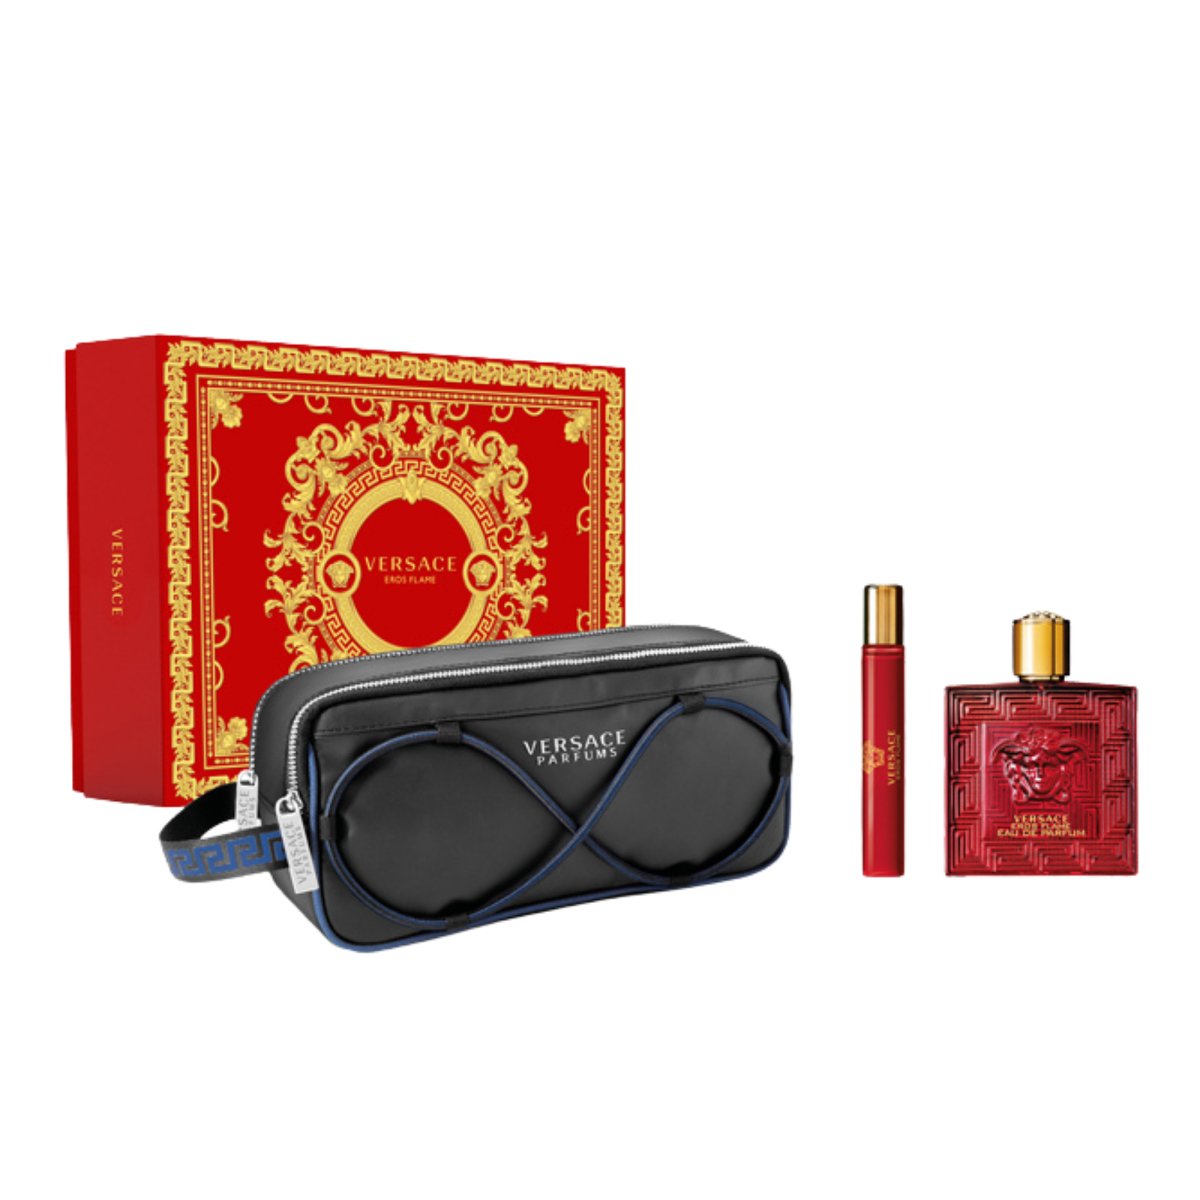 Versace Men's Eros Flame Gift Set Fragrances - Versace - Gift Set - 8011003885251 - Gift Set